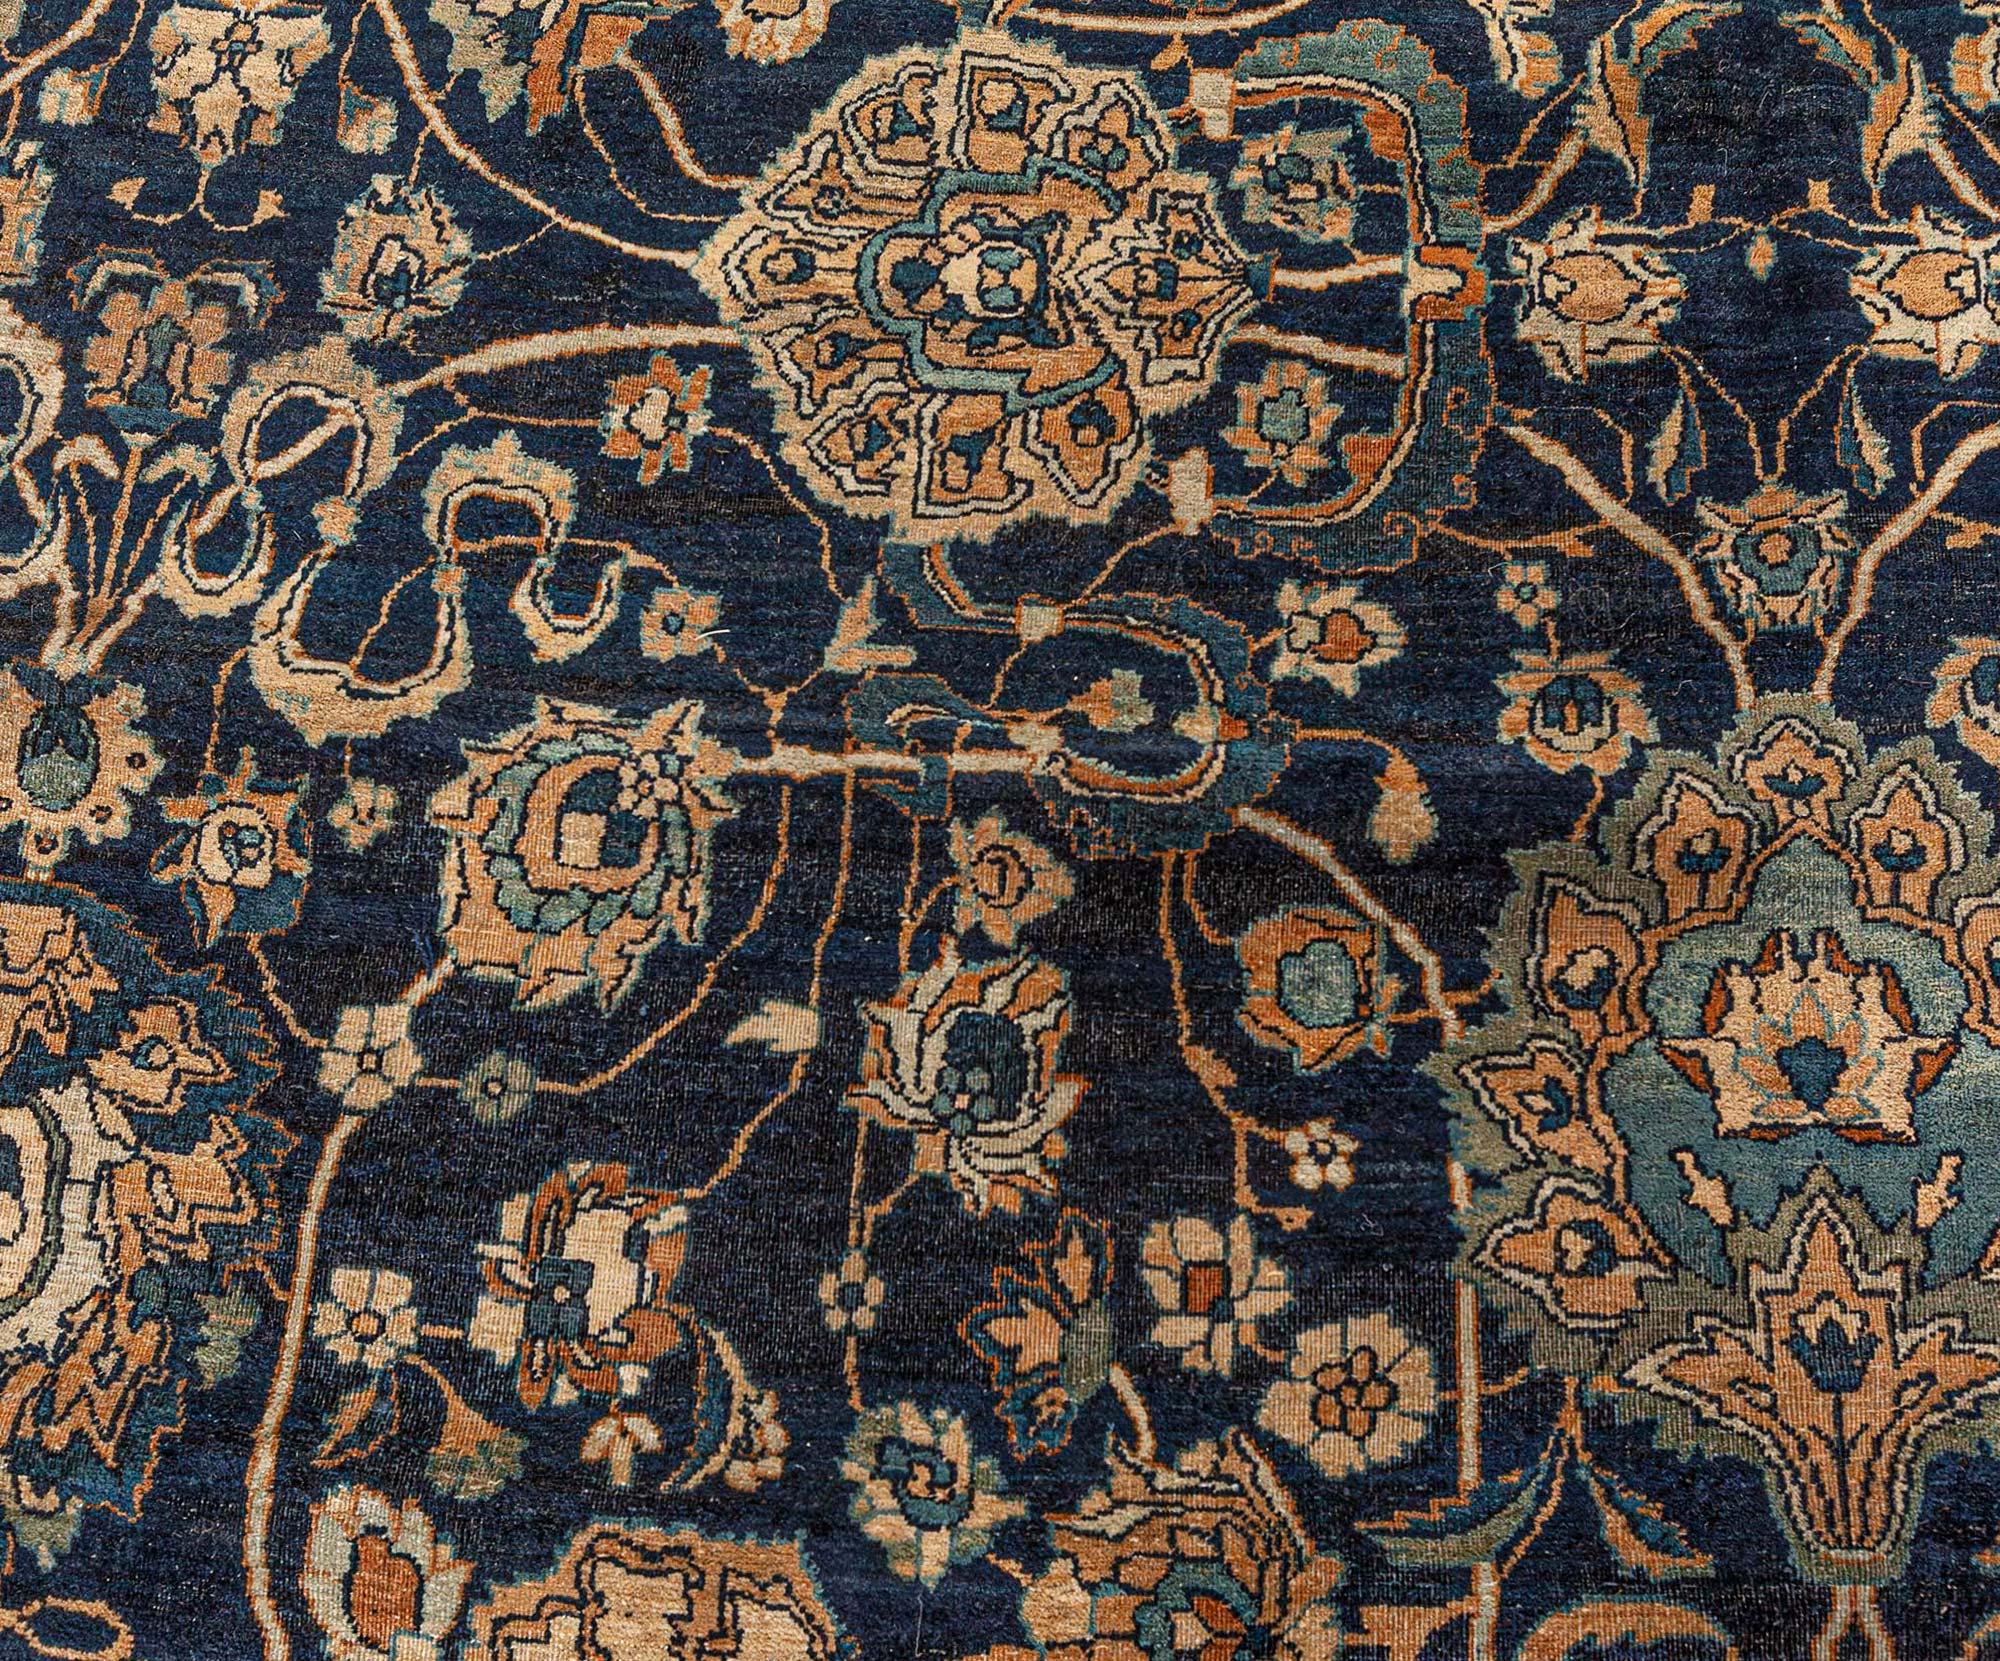 Oversized Vintage Persian Tabriz handmade wool rug
Size: 14'2